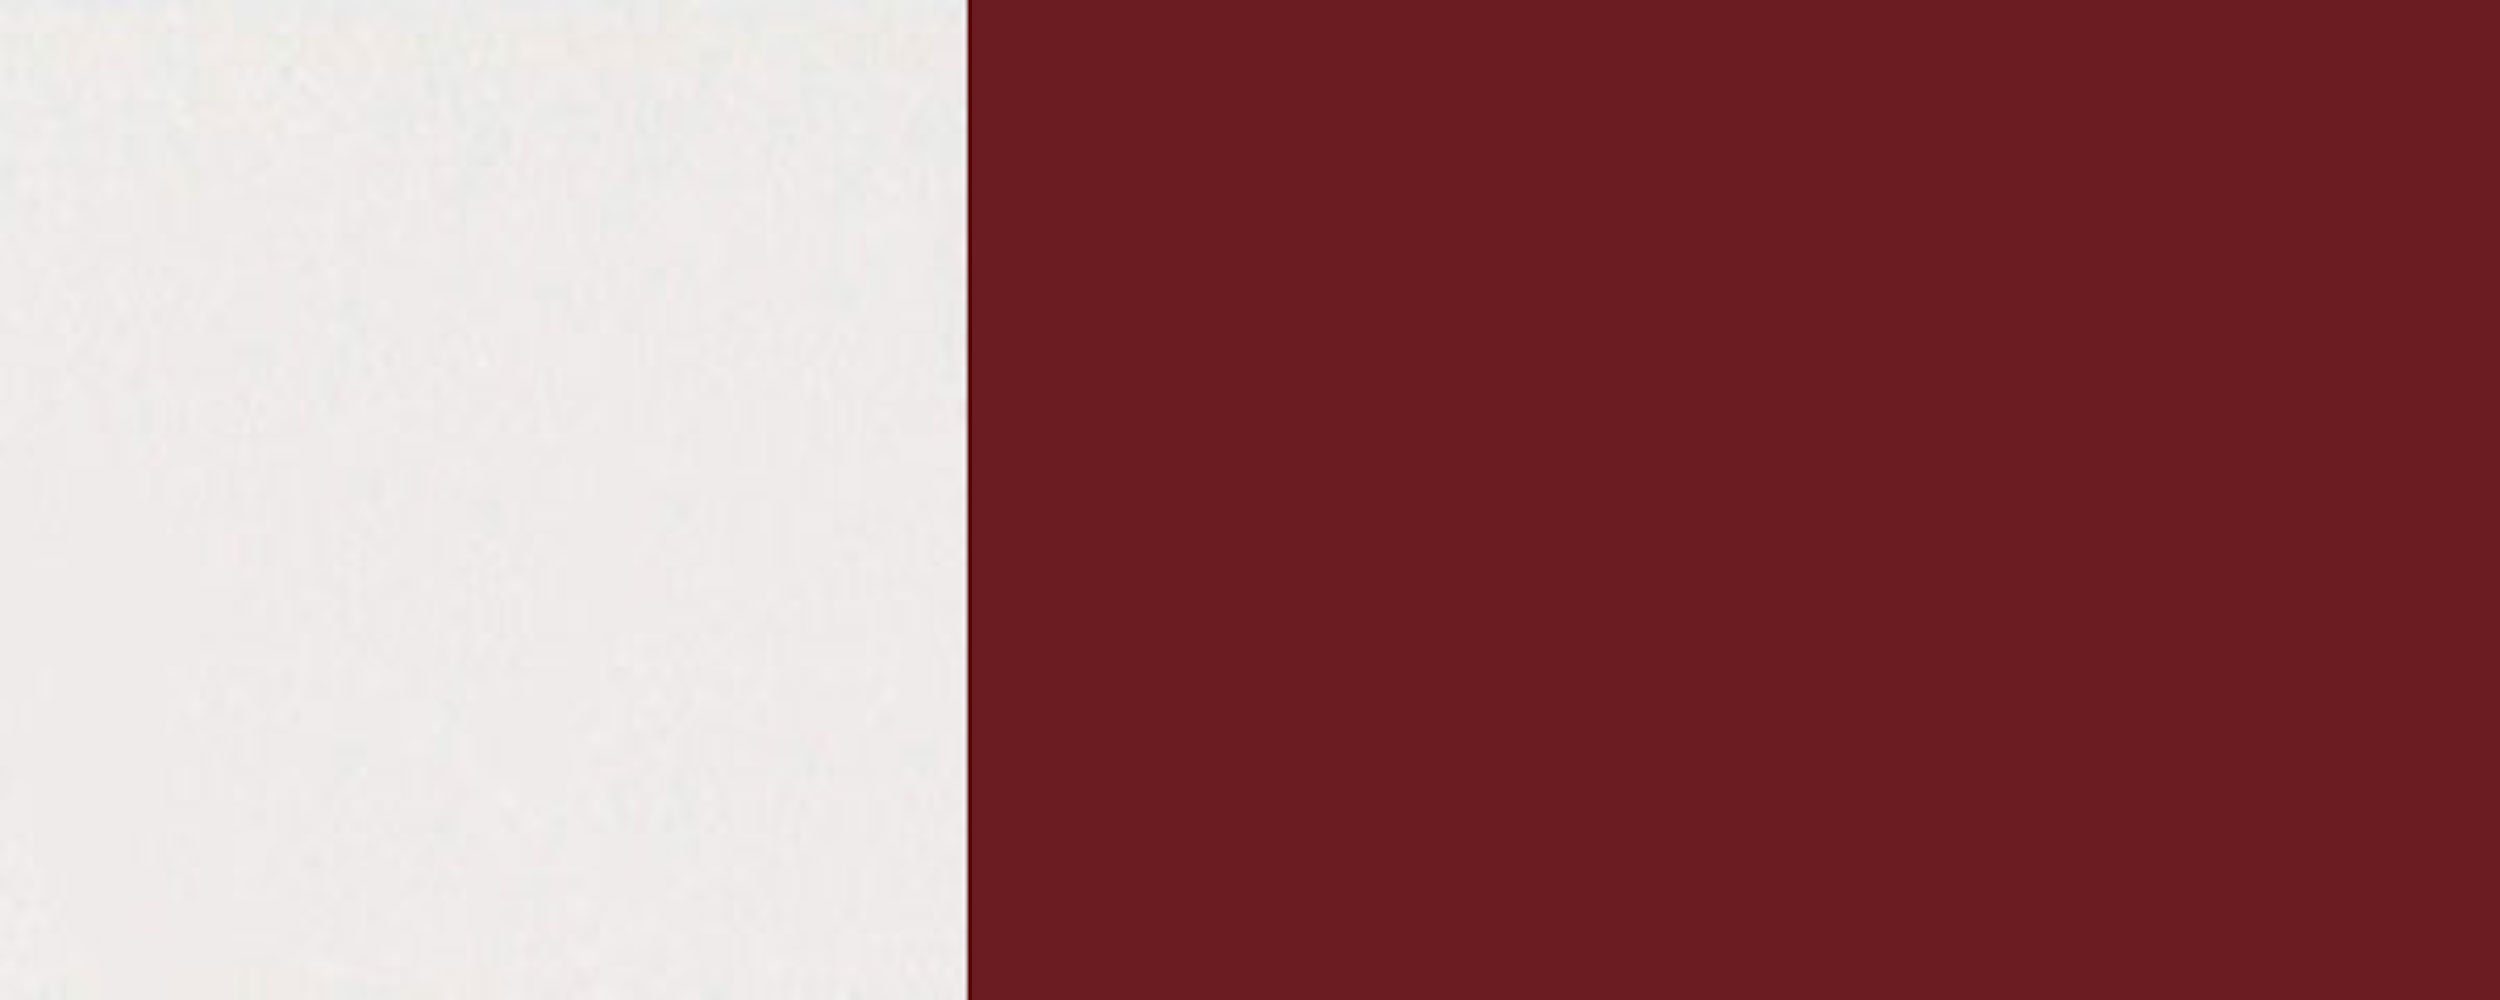 matt 3004 Rimini Schubladen RAL Feldmann-Wohnen Front- und Korpusfarbe mit purpurrot (Rimini) Unterschrank wählbar 3 (Teilauszug) 50cm